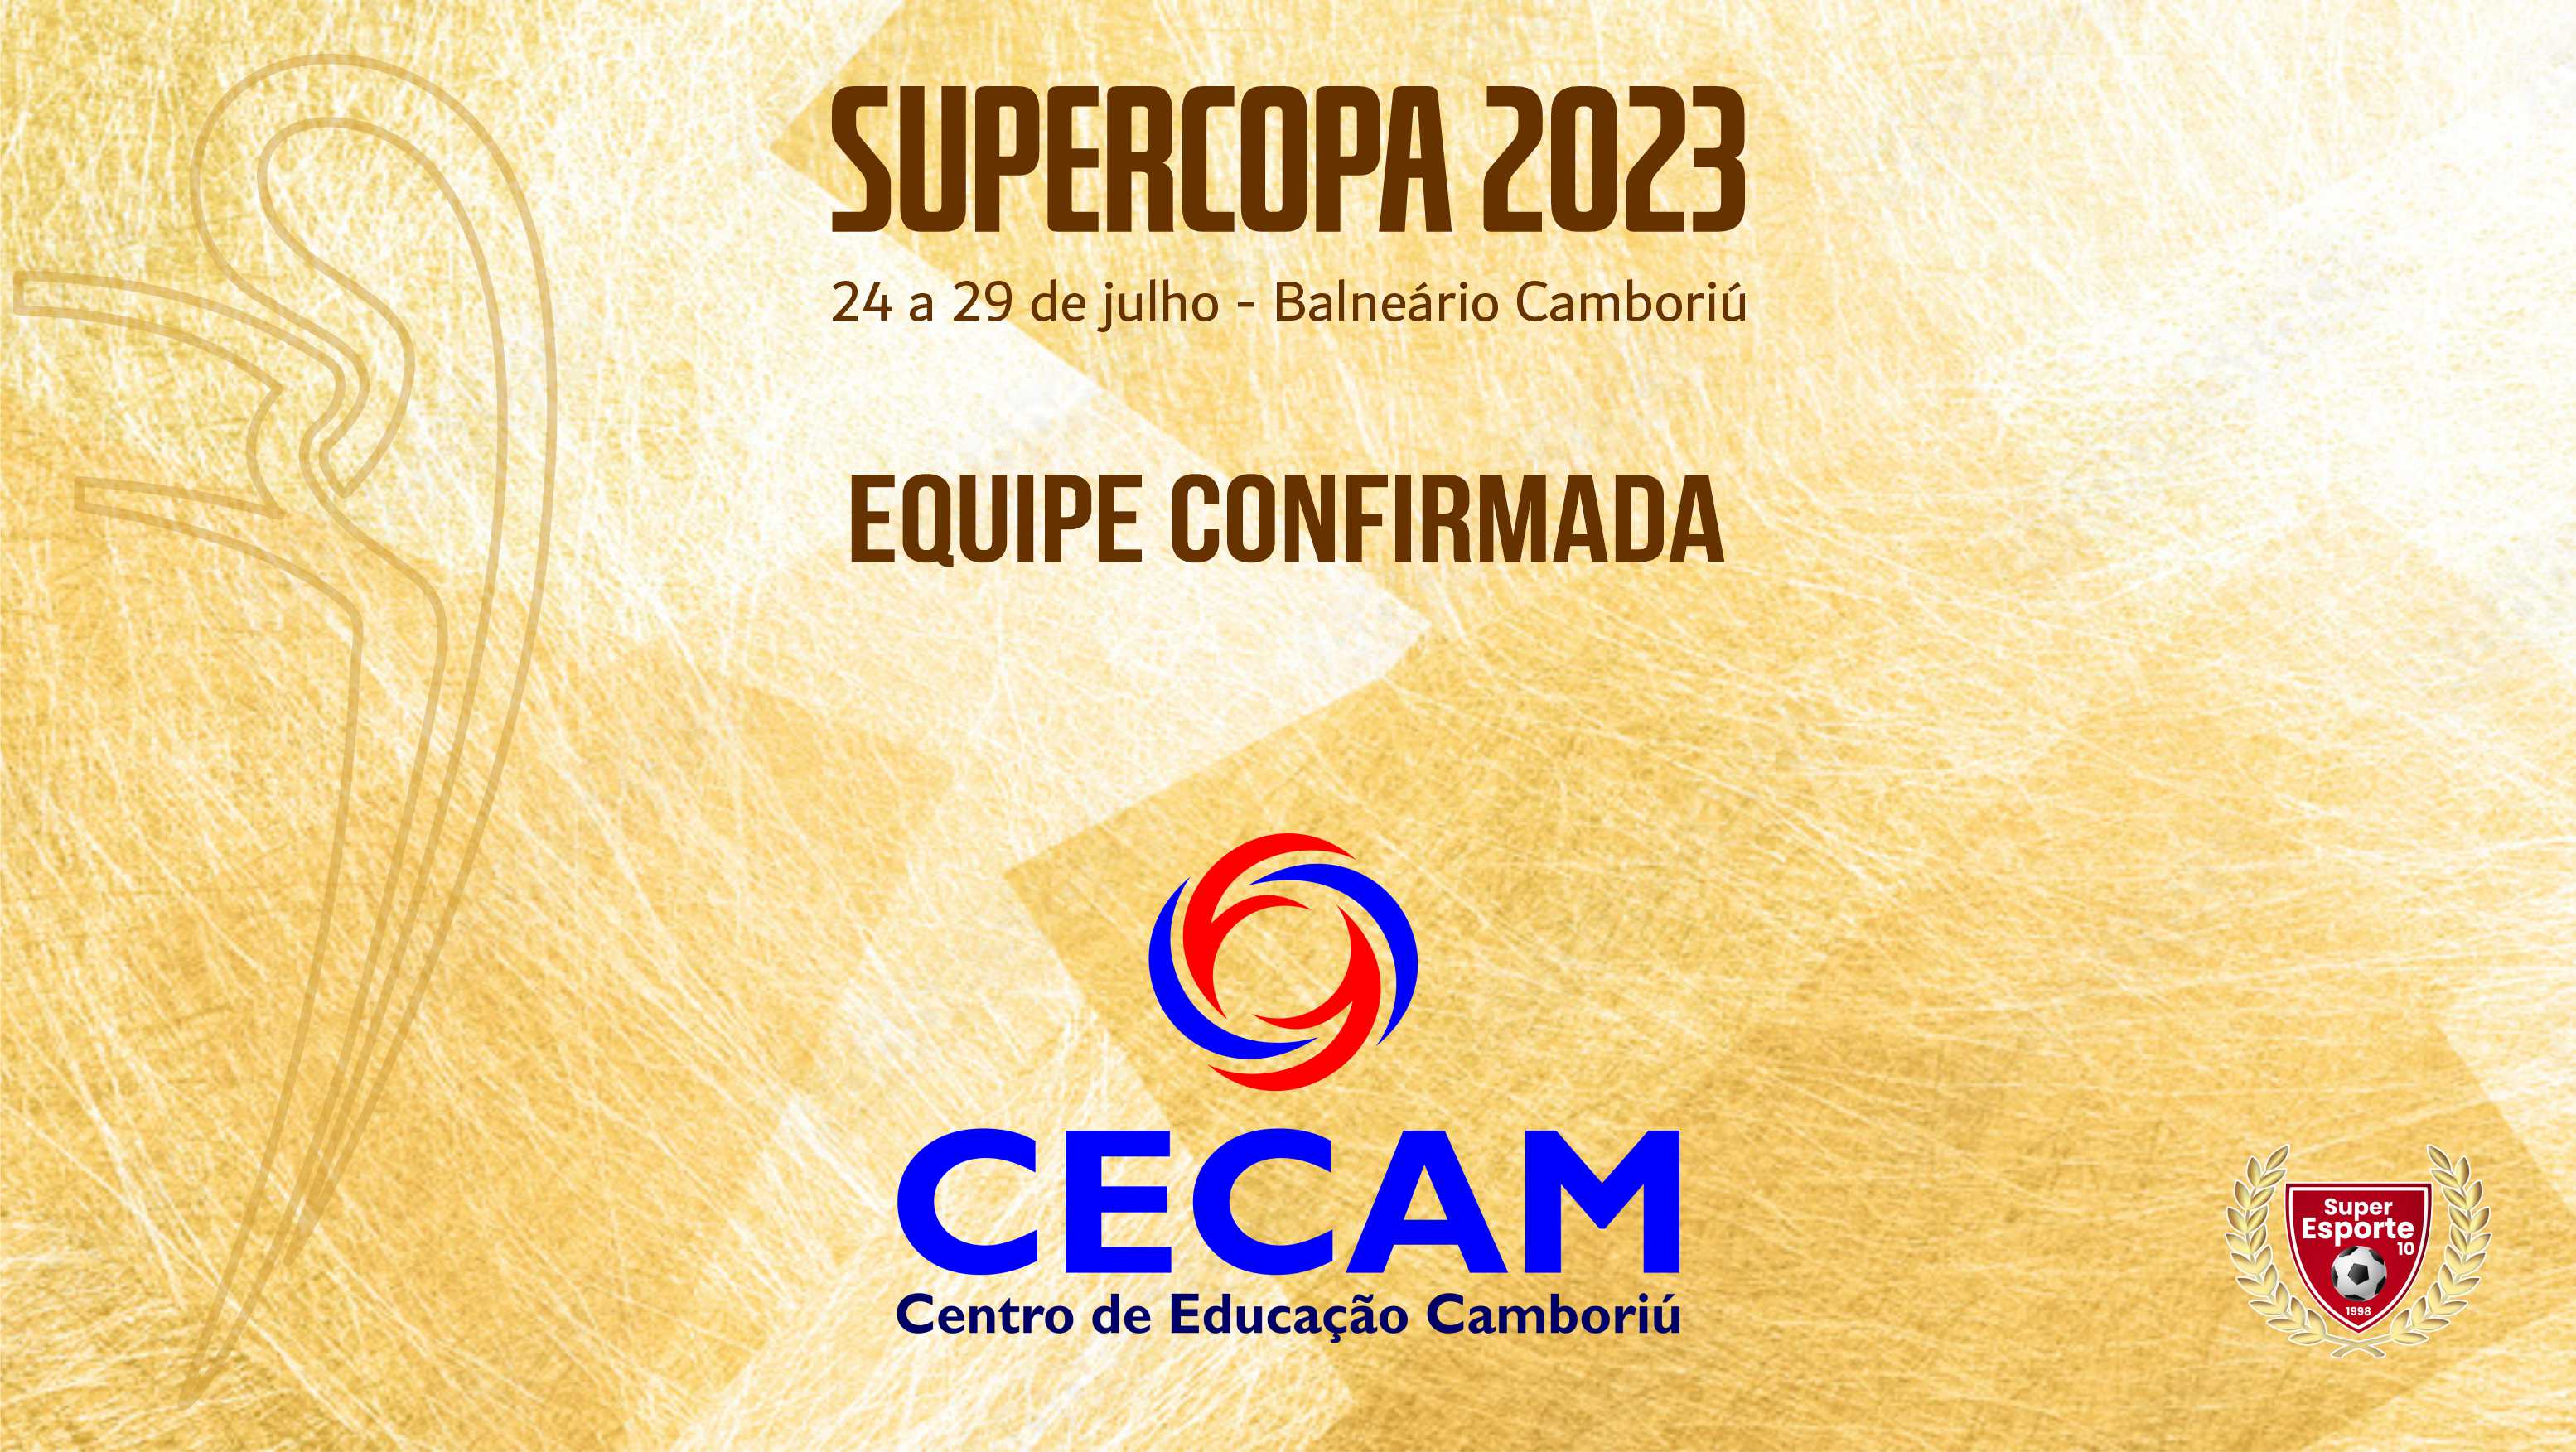 Cecam, de Camboriú, garante presença na Supercopa